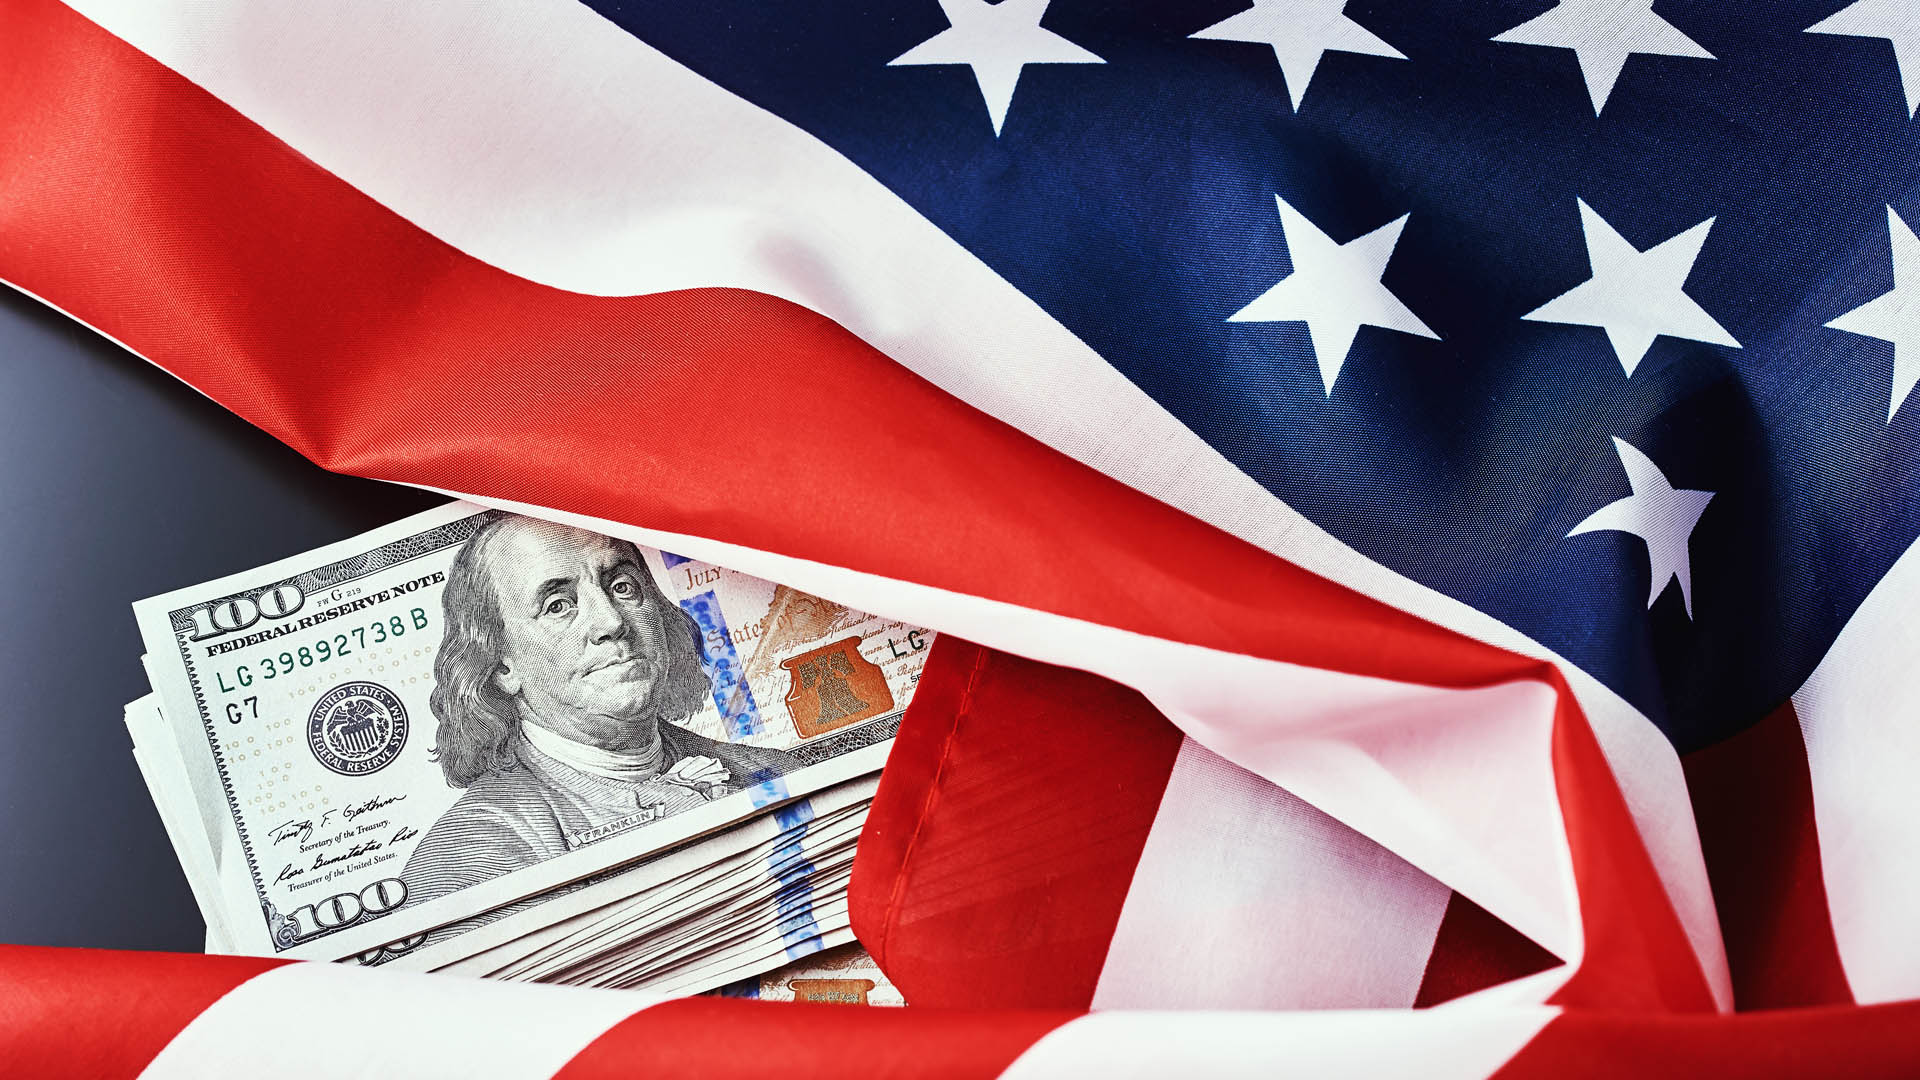 Рыночная экономика в сша. Доллар США И флаг. Долар и американский флаг. Доллар США на фоне флага. Флаг США И деньги.